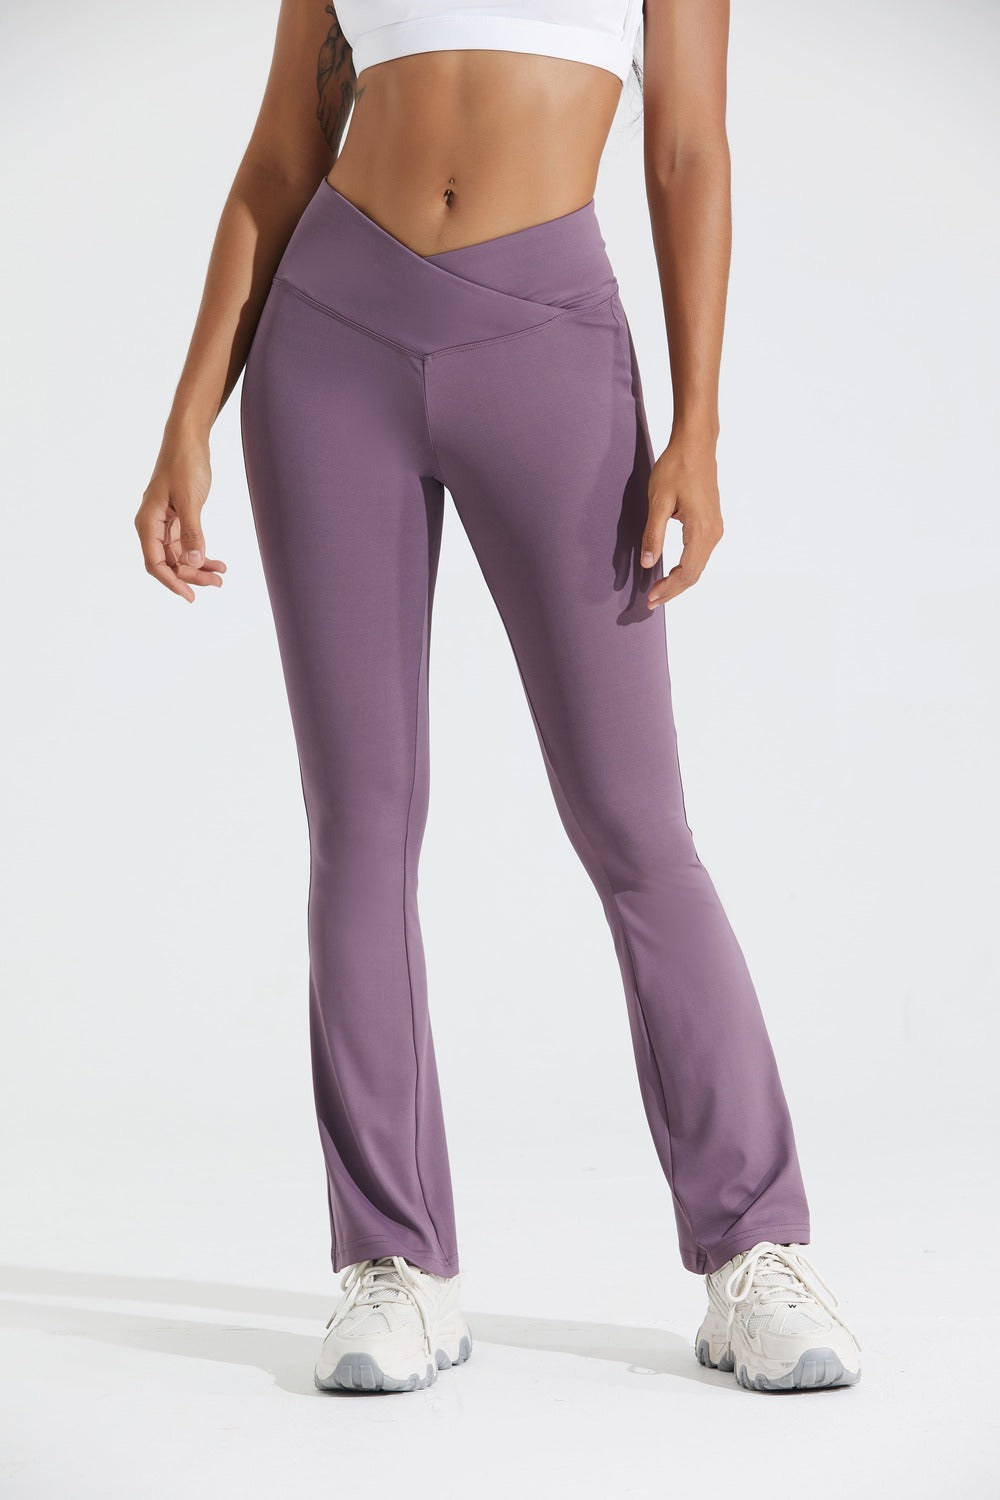 Flare Crossover Legging - LA7 ONLINE Activewear Purple / L